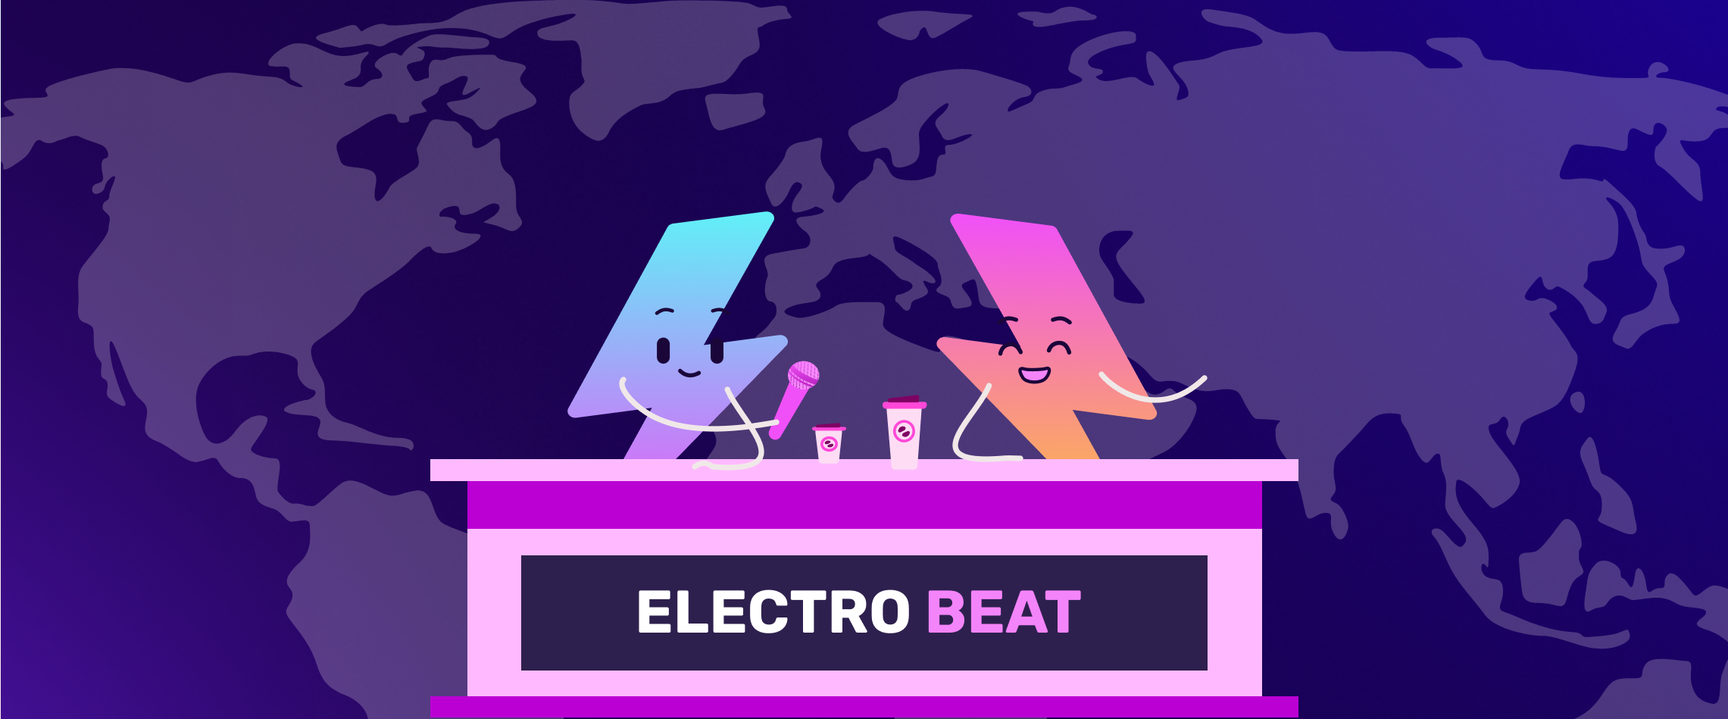 Electro Beat news header